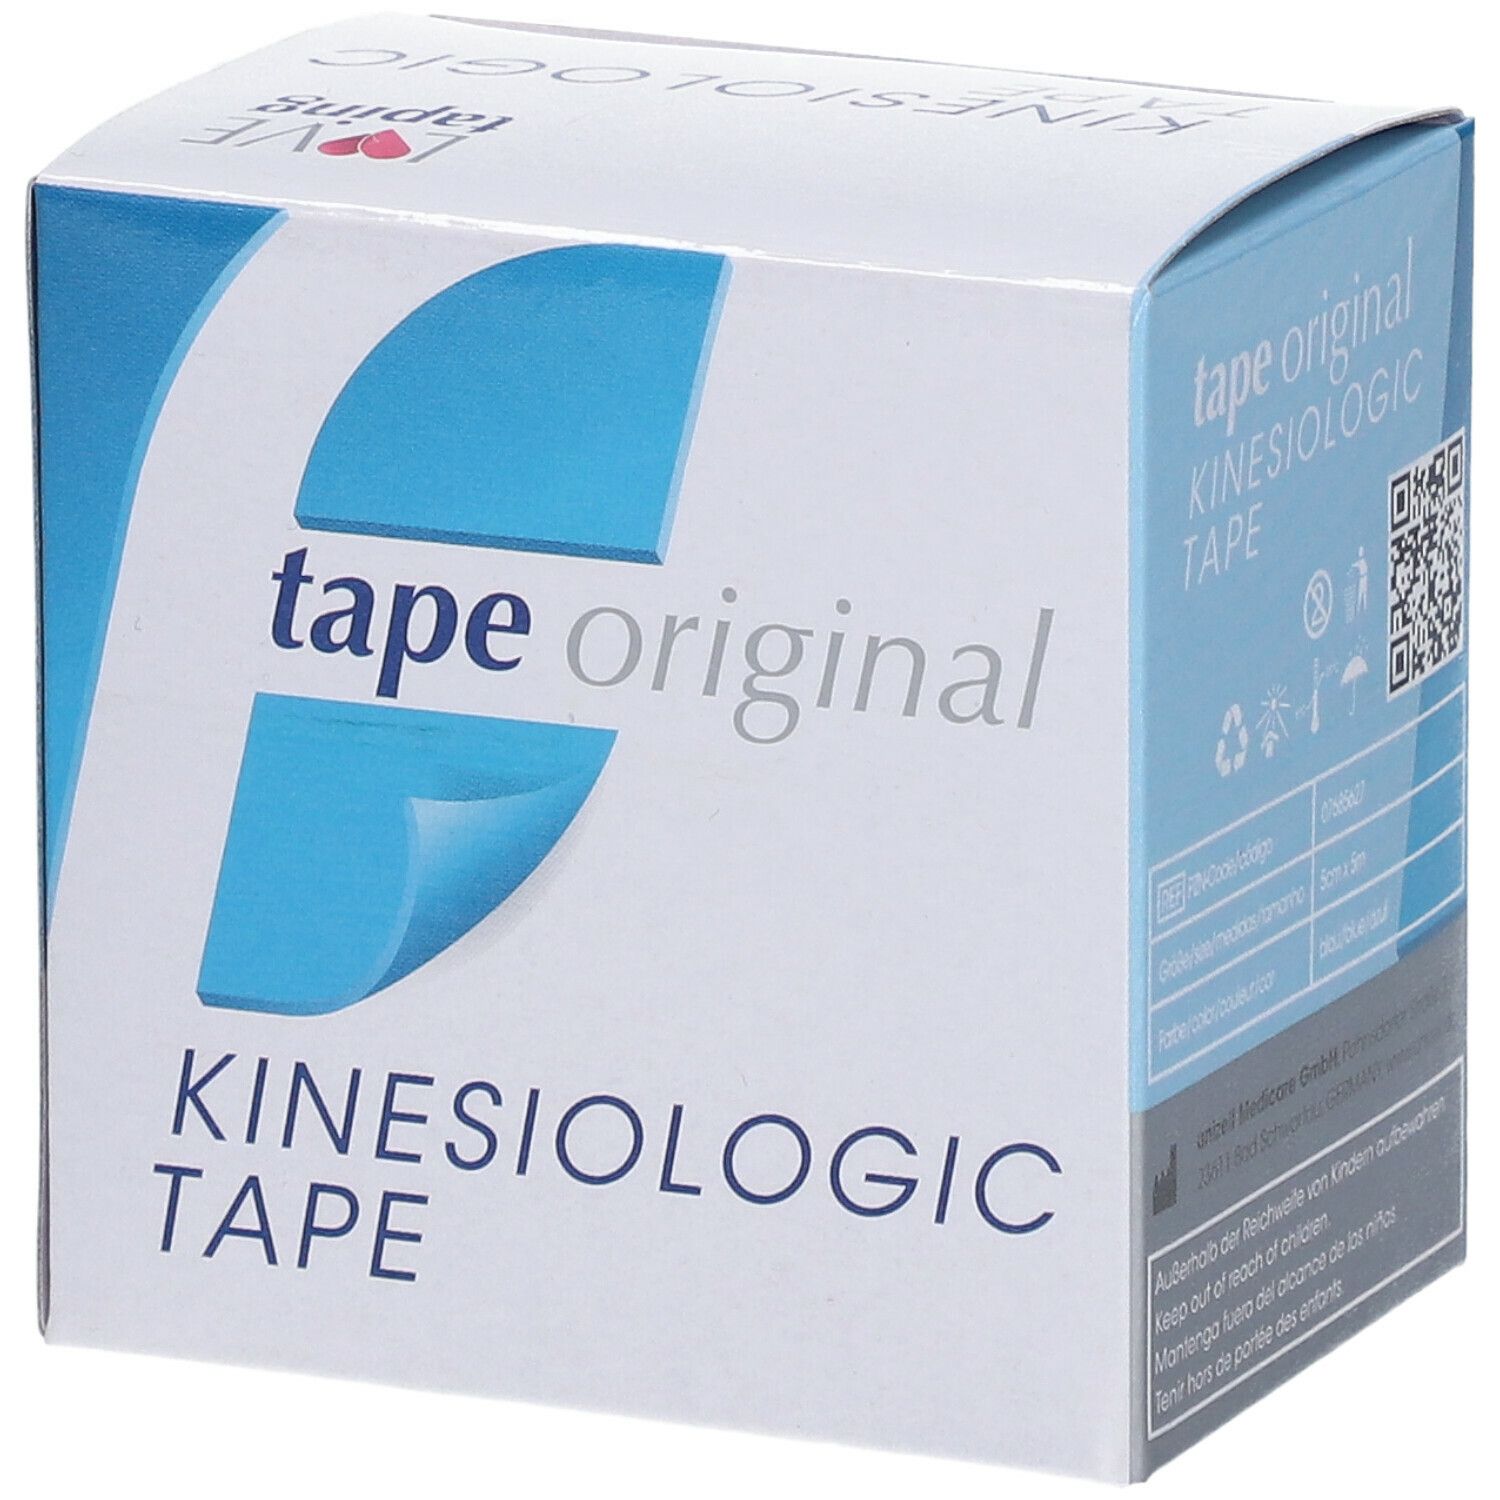 Kinesio tape original Kinesiologic Tape blau 5 cm x 5 m